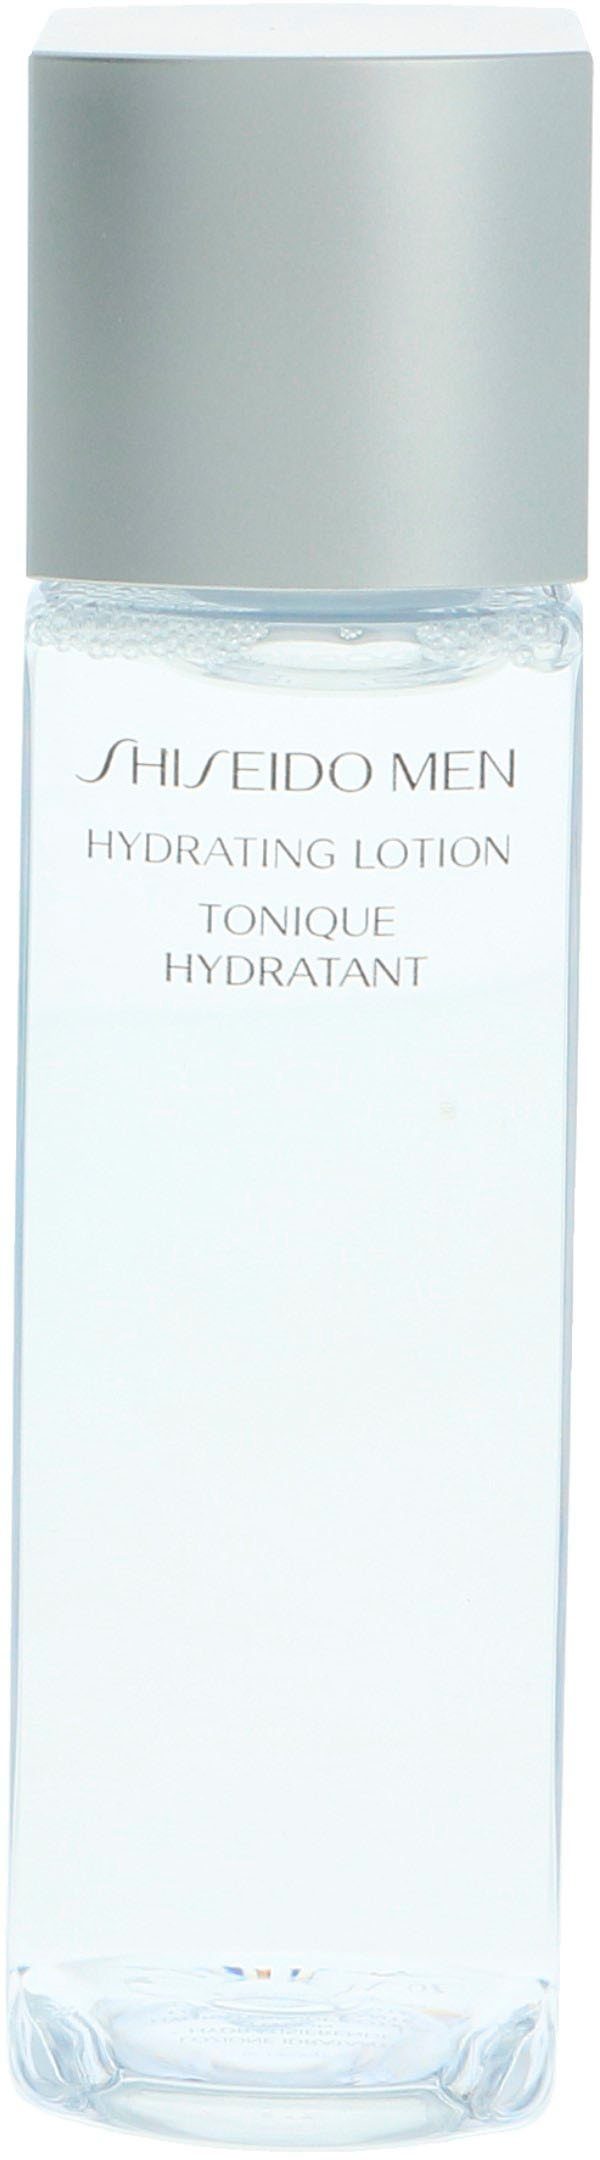 SHISEIDO Gesichtslotion Hydrating Lotion | Tagescremes